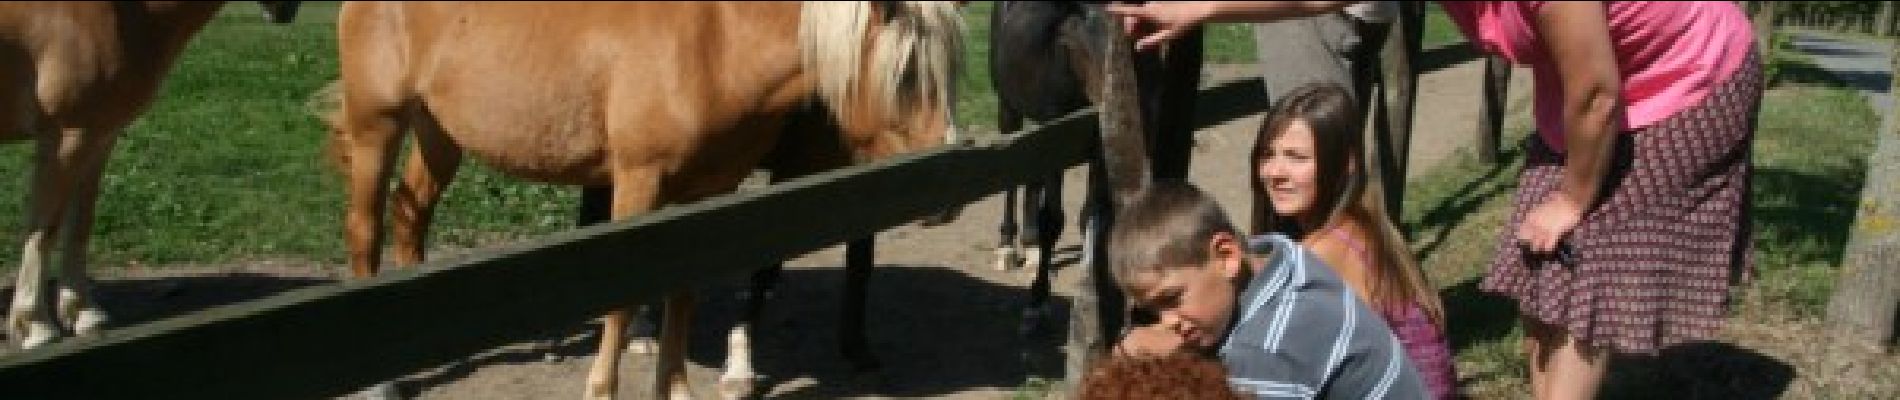 Punto de interés Beauraing - Comogne horse-milking farm - Photo